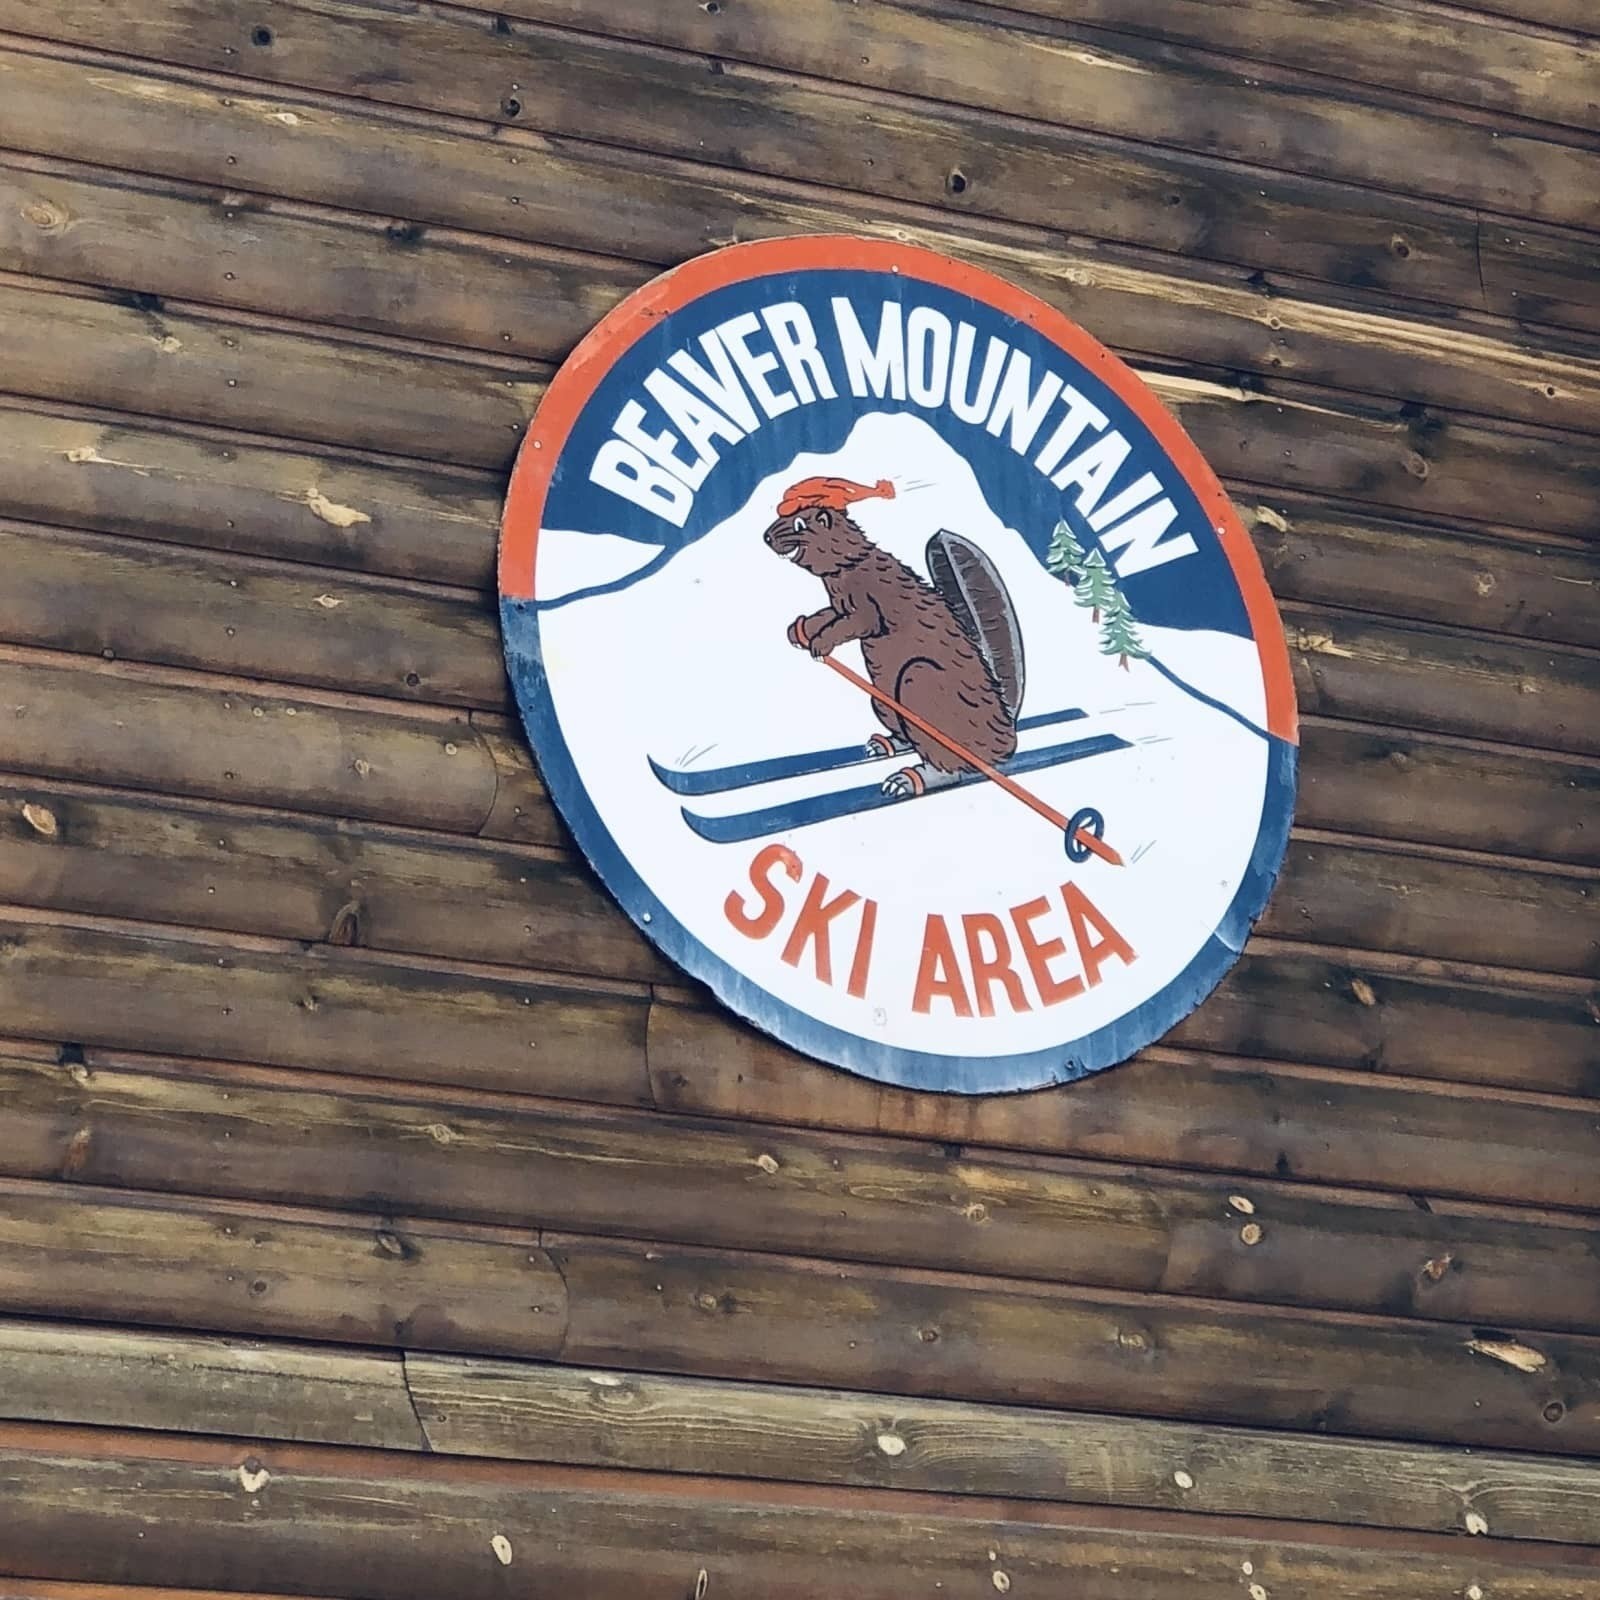 beaver-mountain-ski-area-signjpg